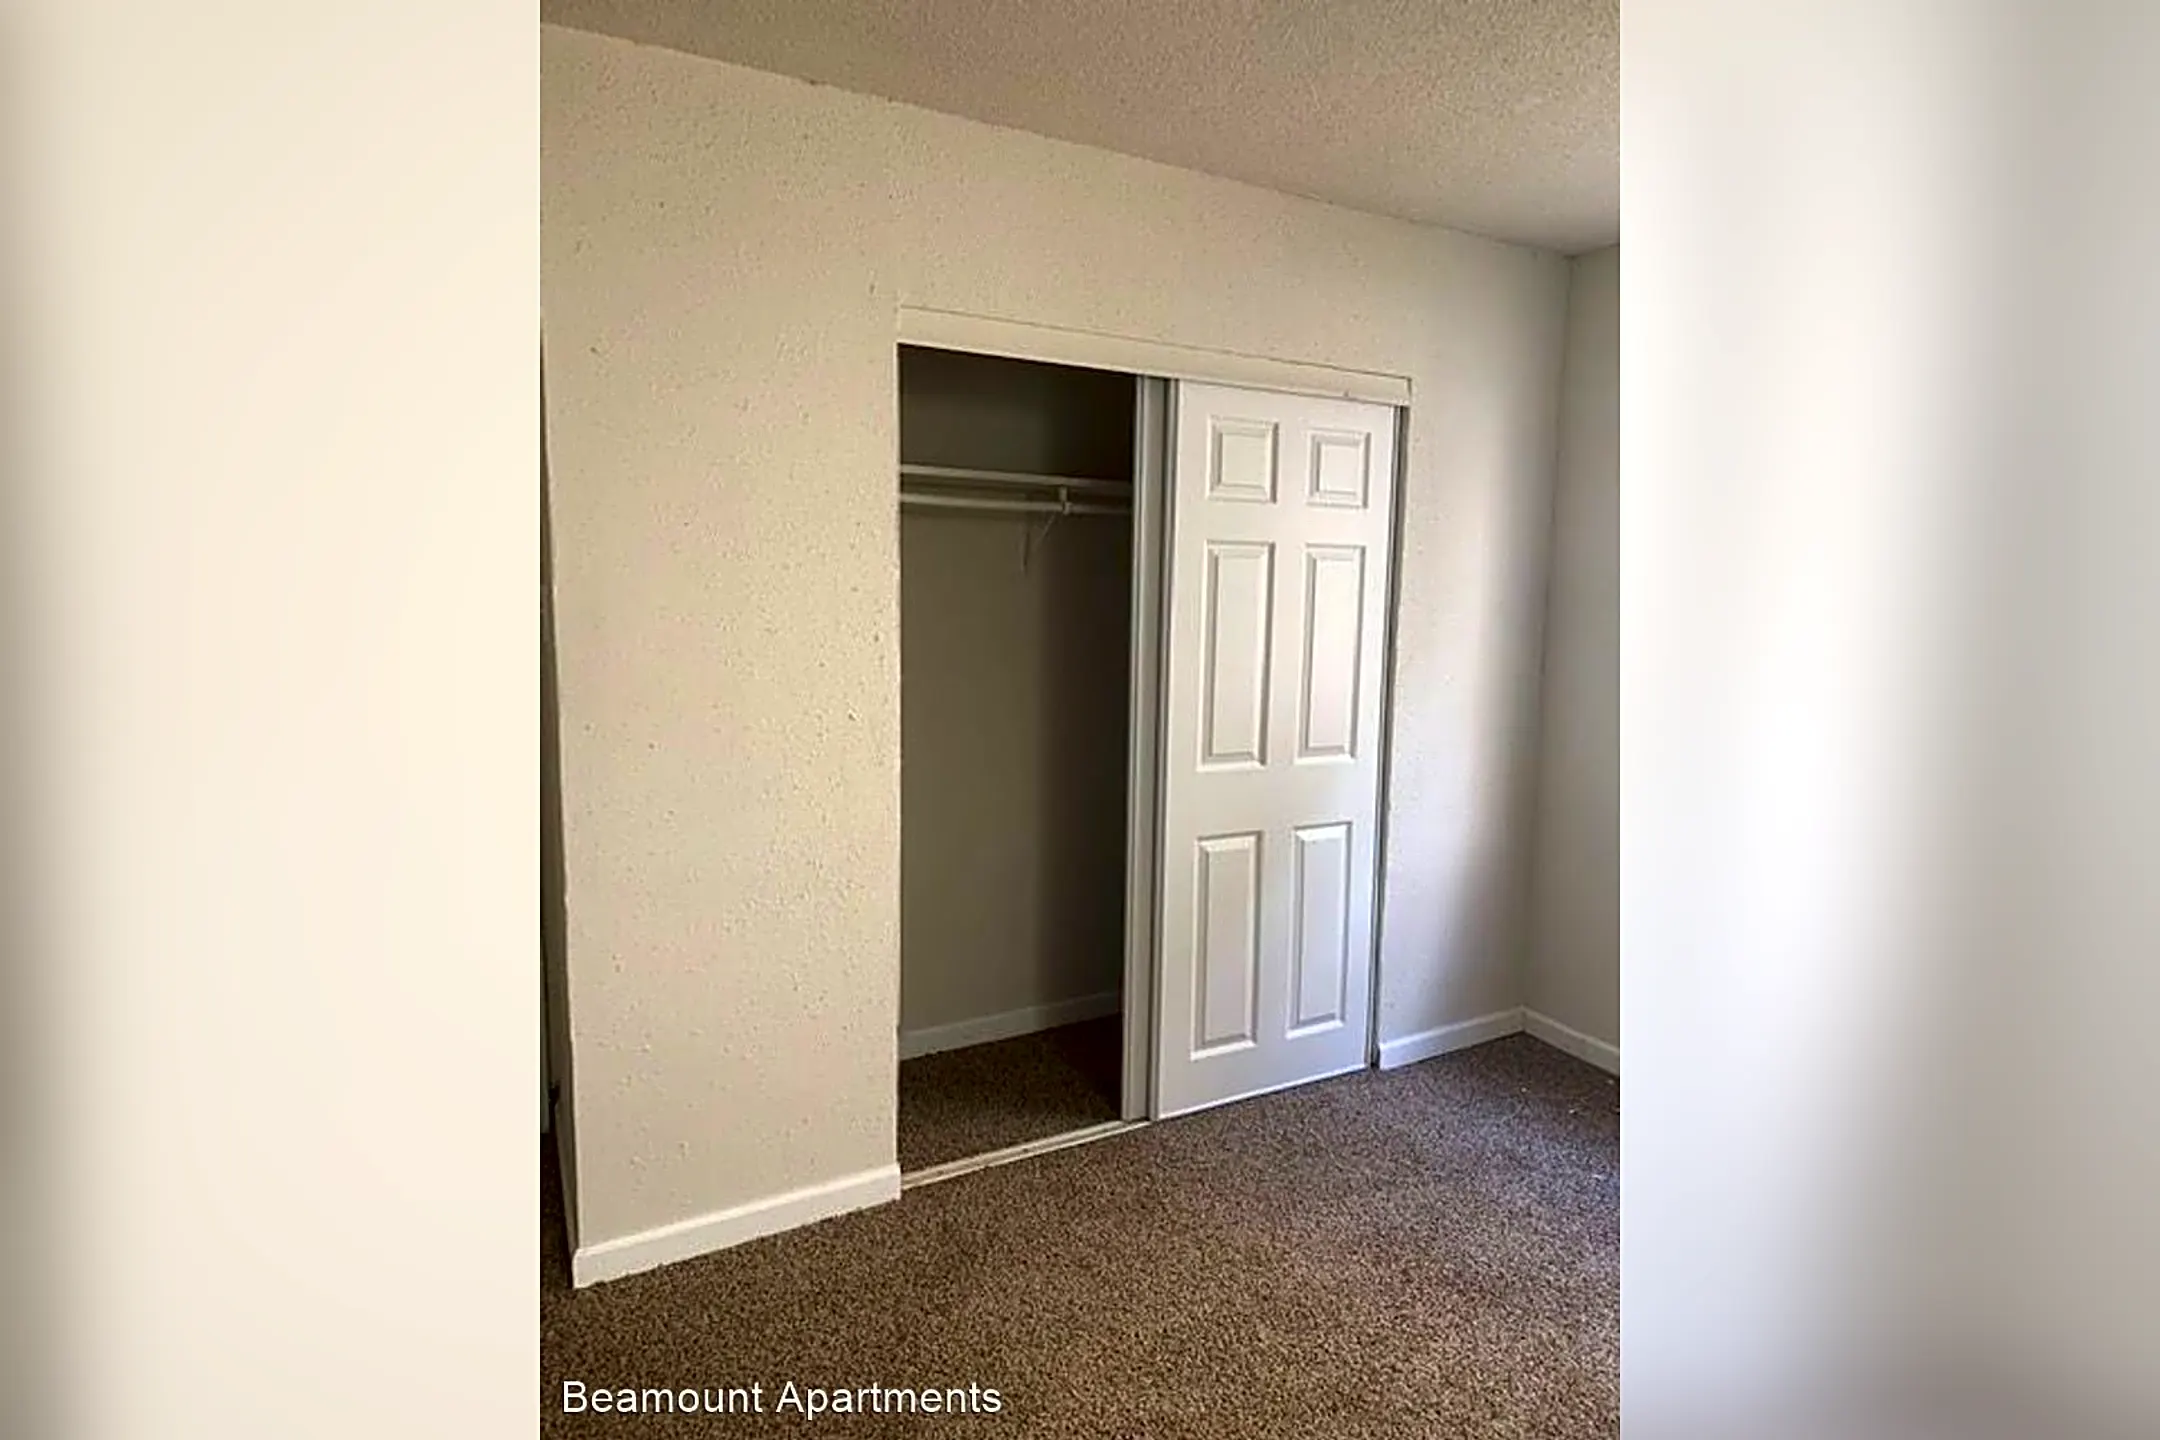 Bedroom - Beaumont Apartments - Beaumont, TX